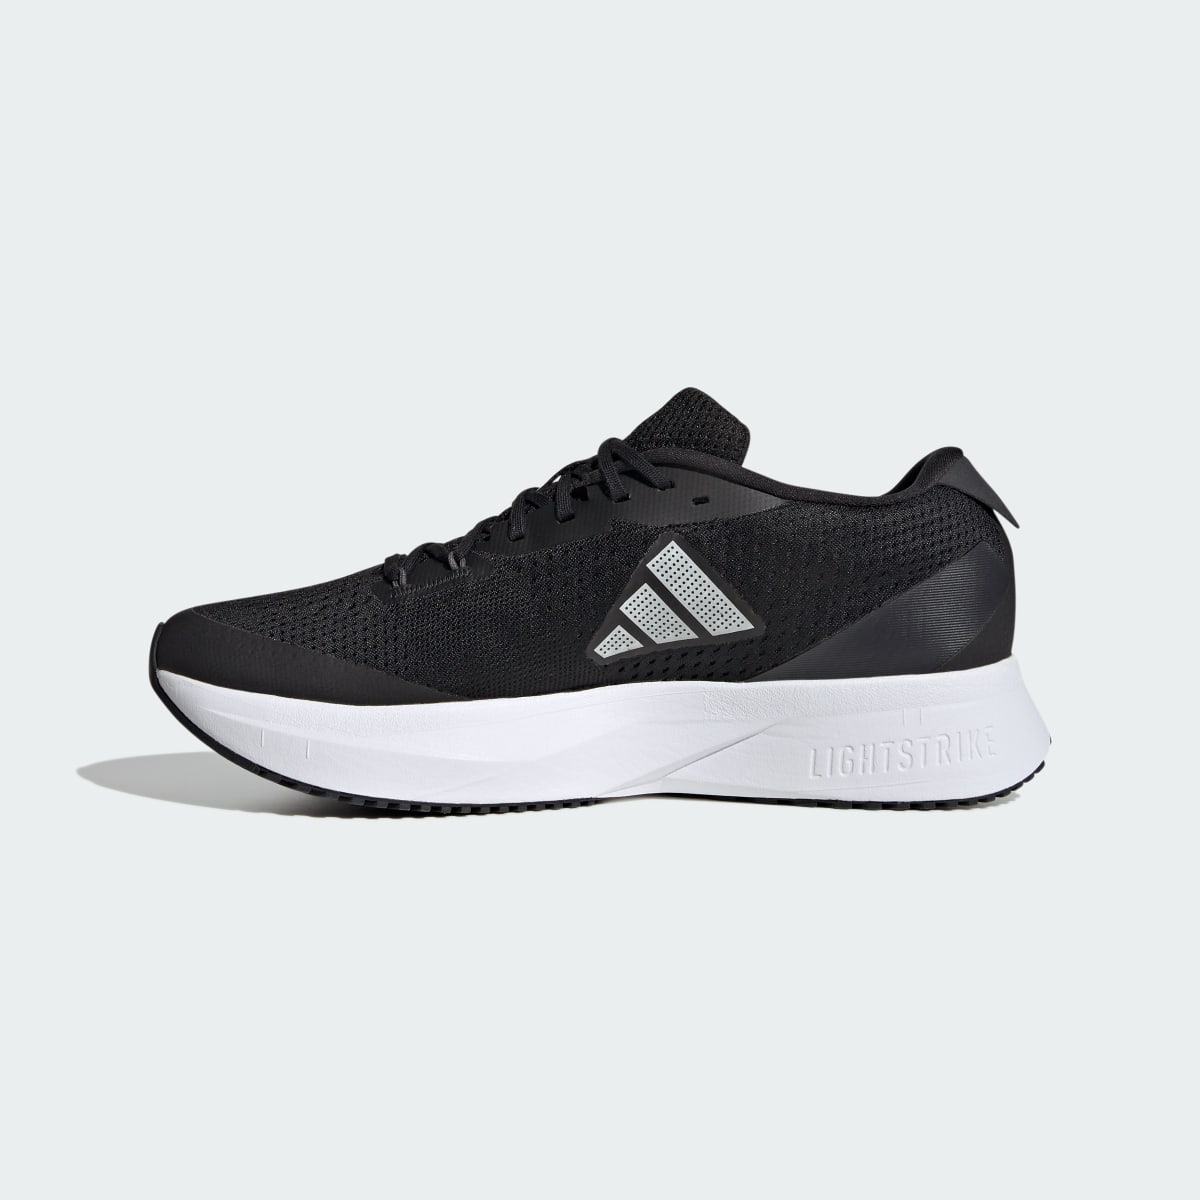 Adidas Adizero SL Wide Lightstrike Running Shoes. 7